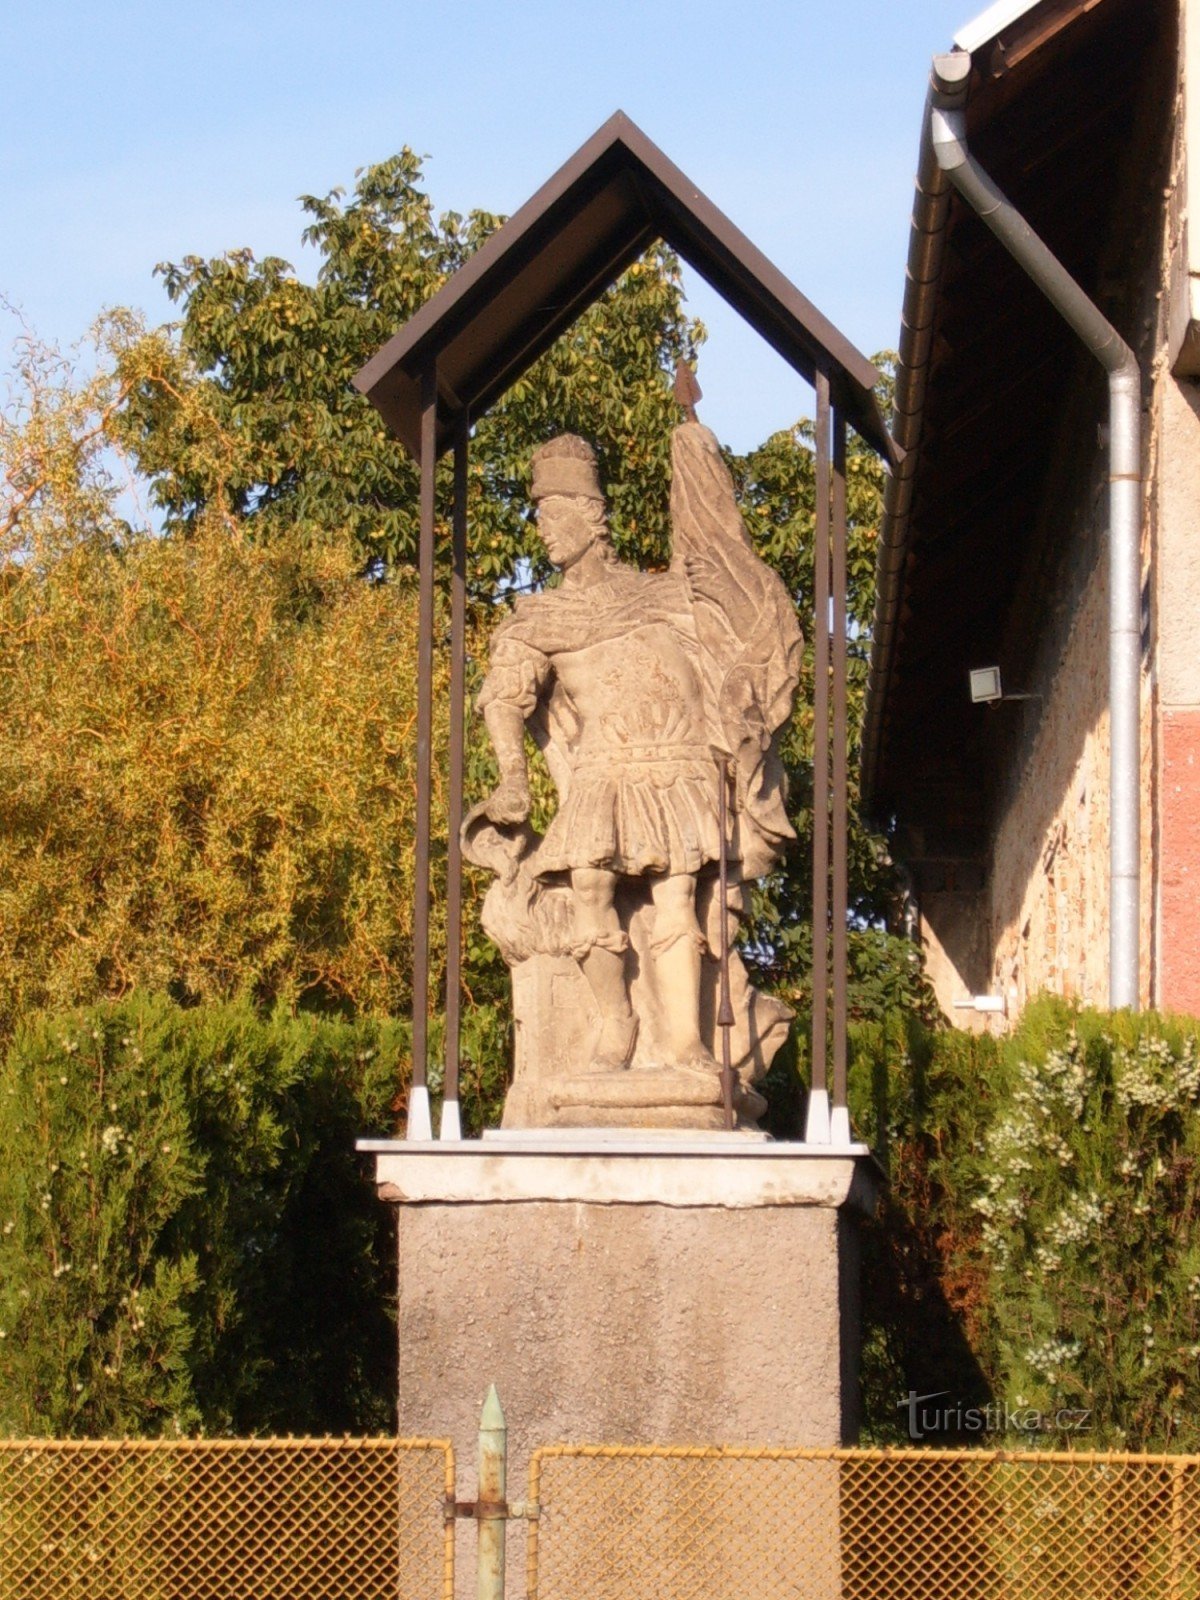 Martin's statue of St. Floriana